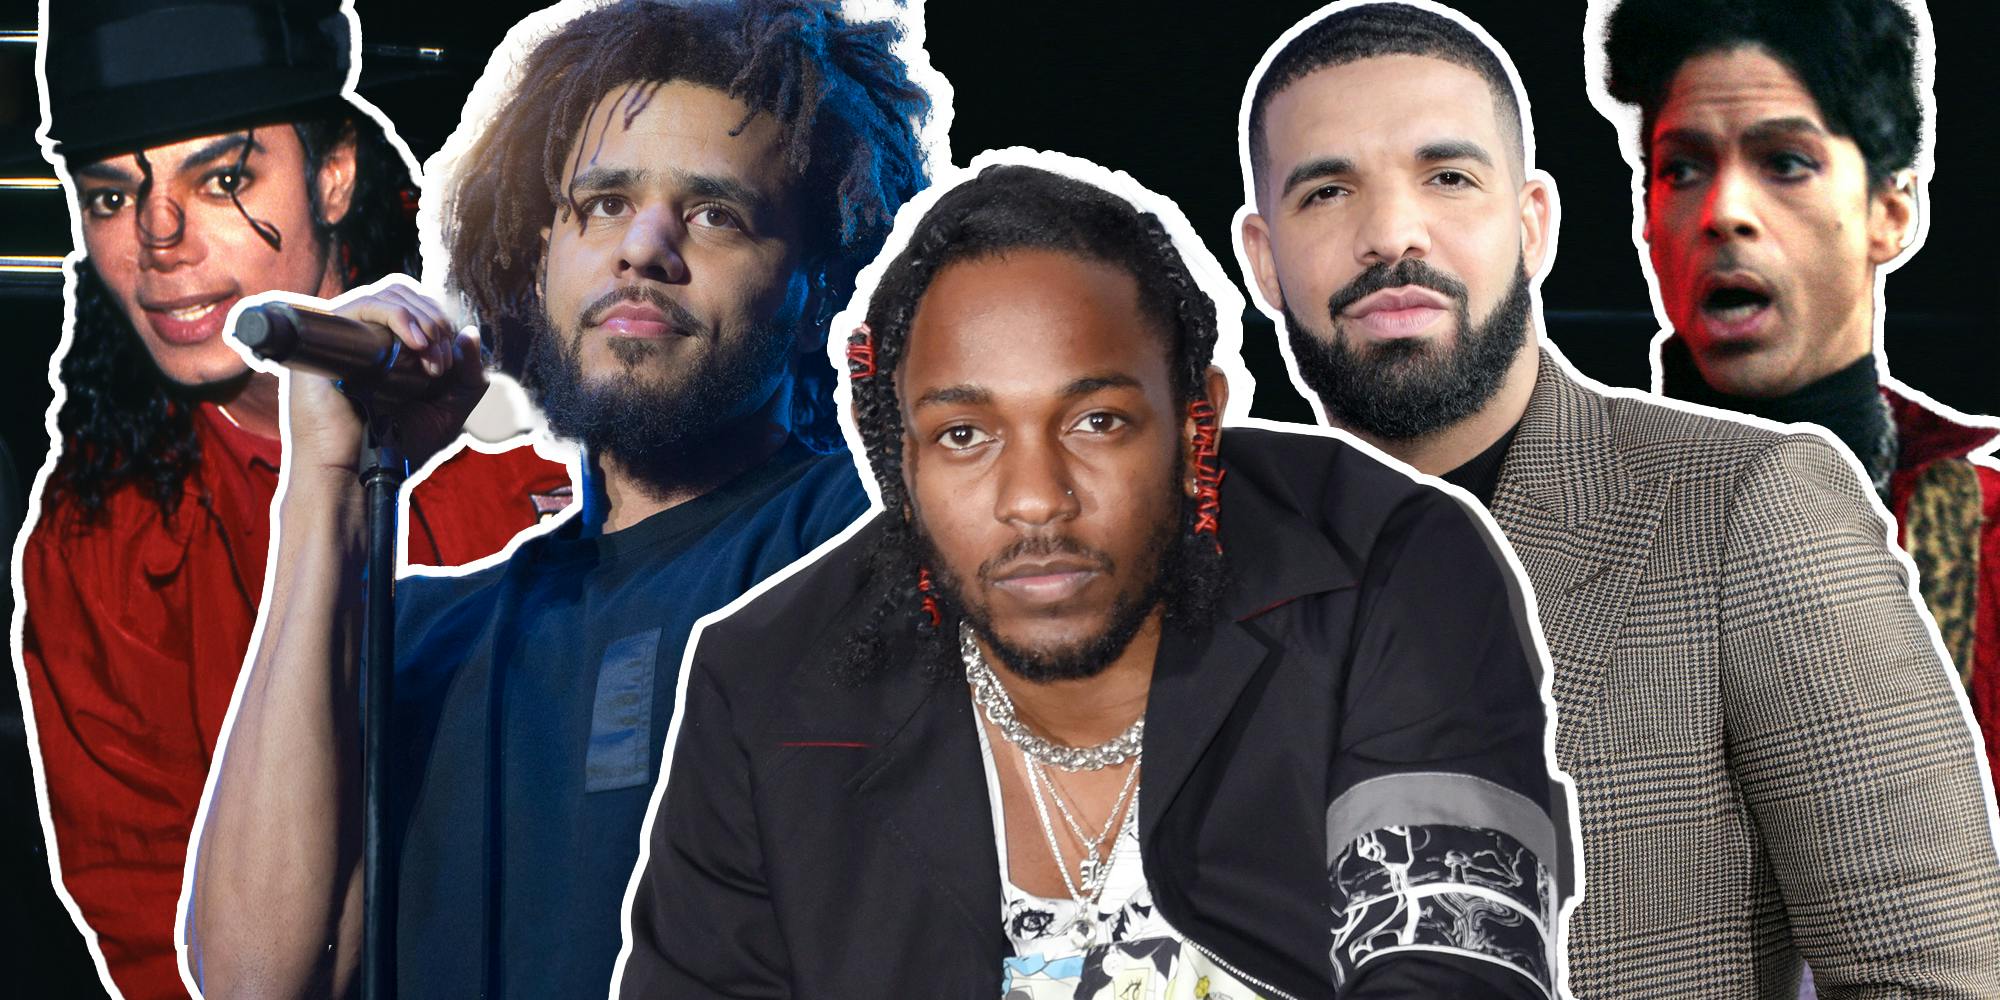 Kendrick Lamar’s diss of Drake, J. Cole, ignites Michael Jackson vs Prince debate #JCole